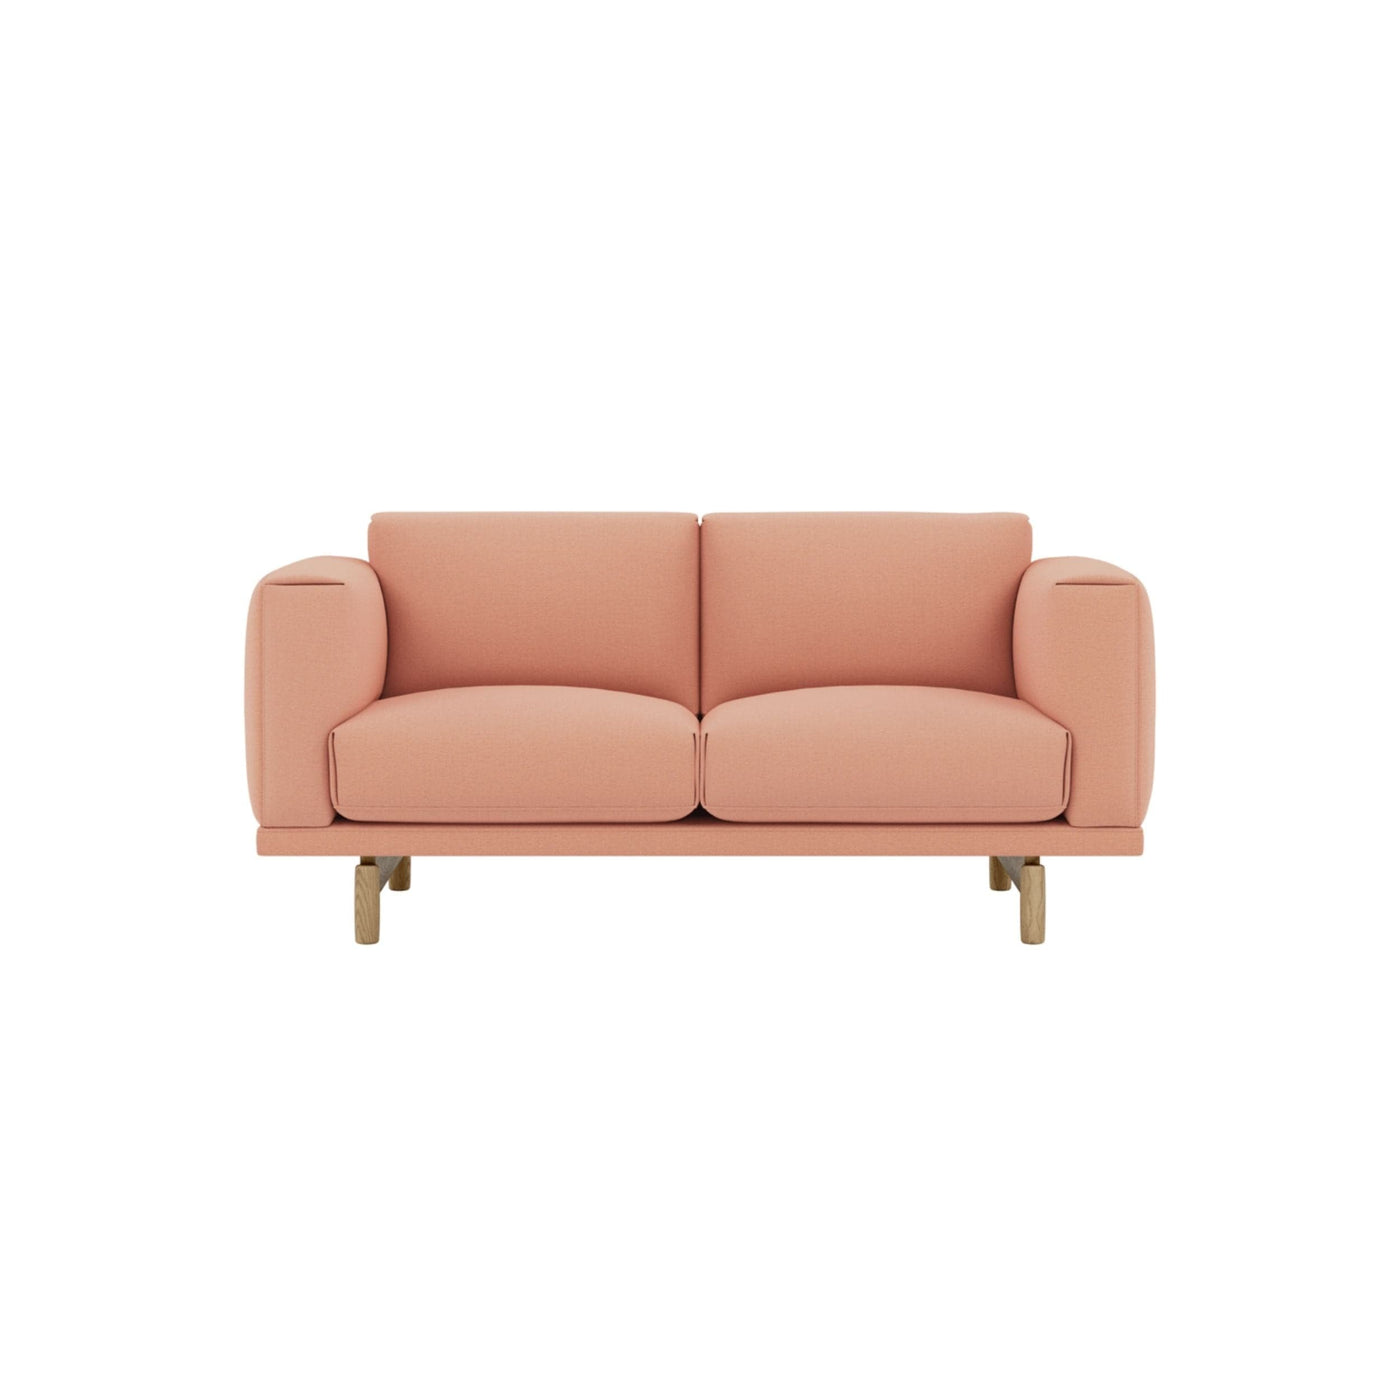 Muuto Rest Studio Sofa in steelcut trio 515. Made to order from someday designs. #colour_steelcut-trio-515